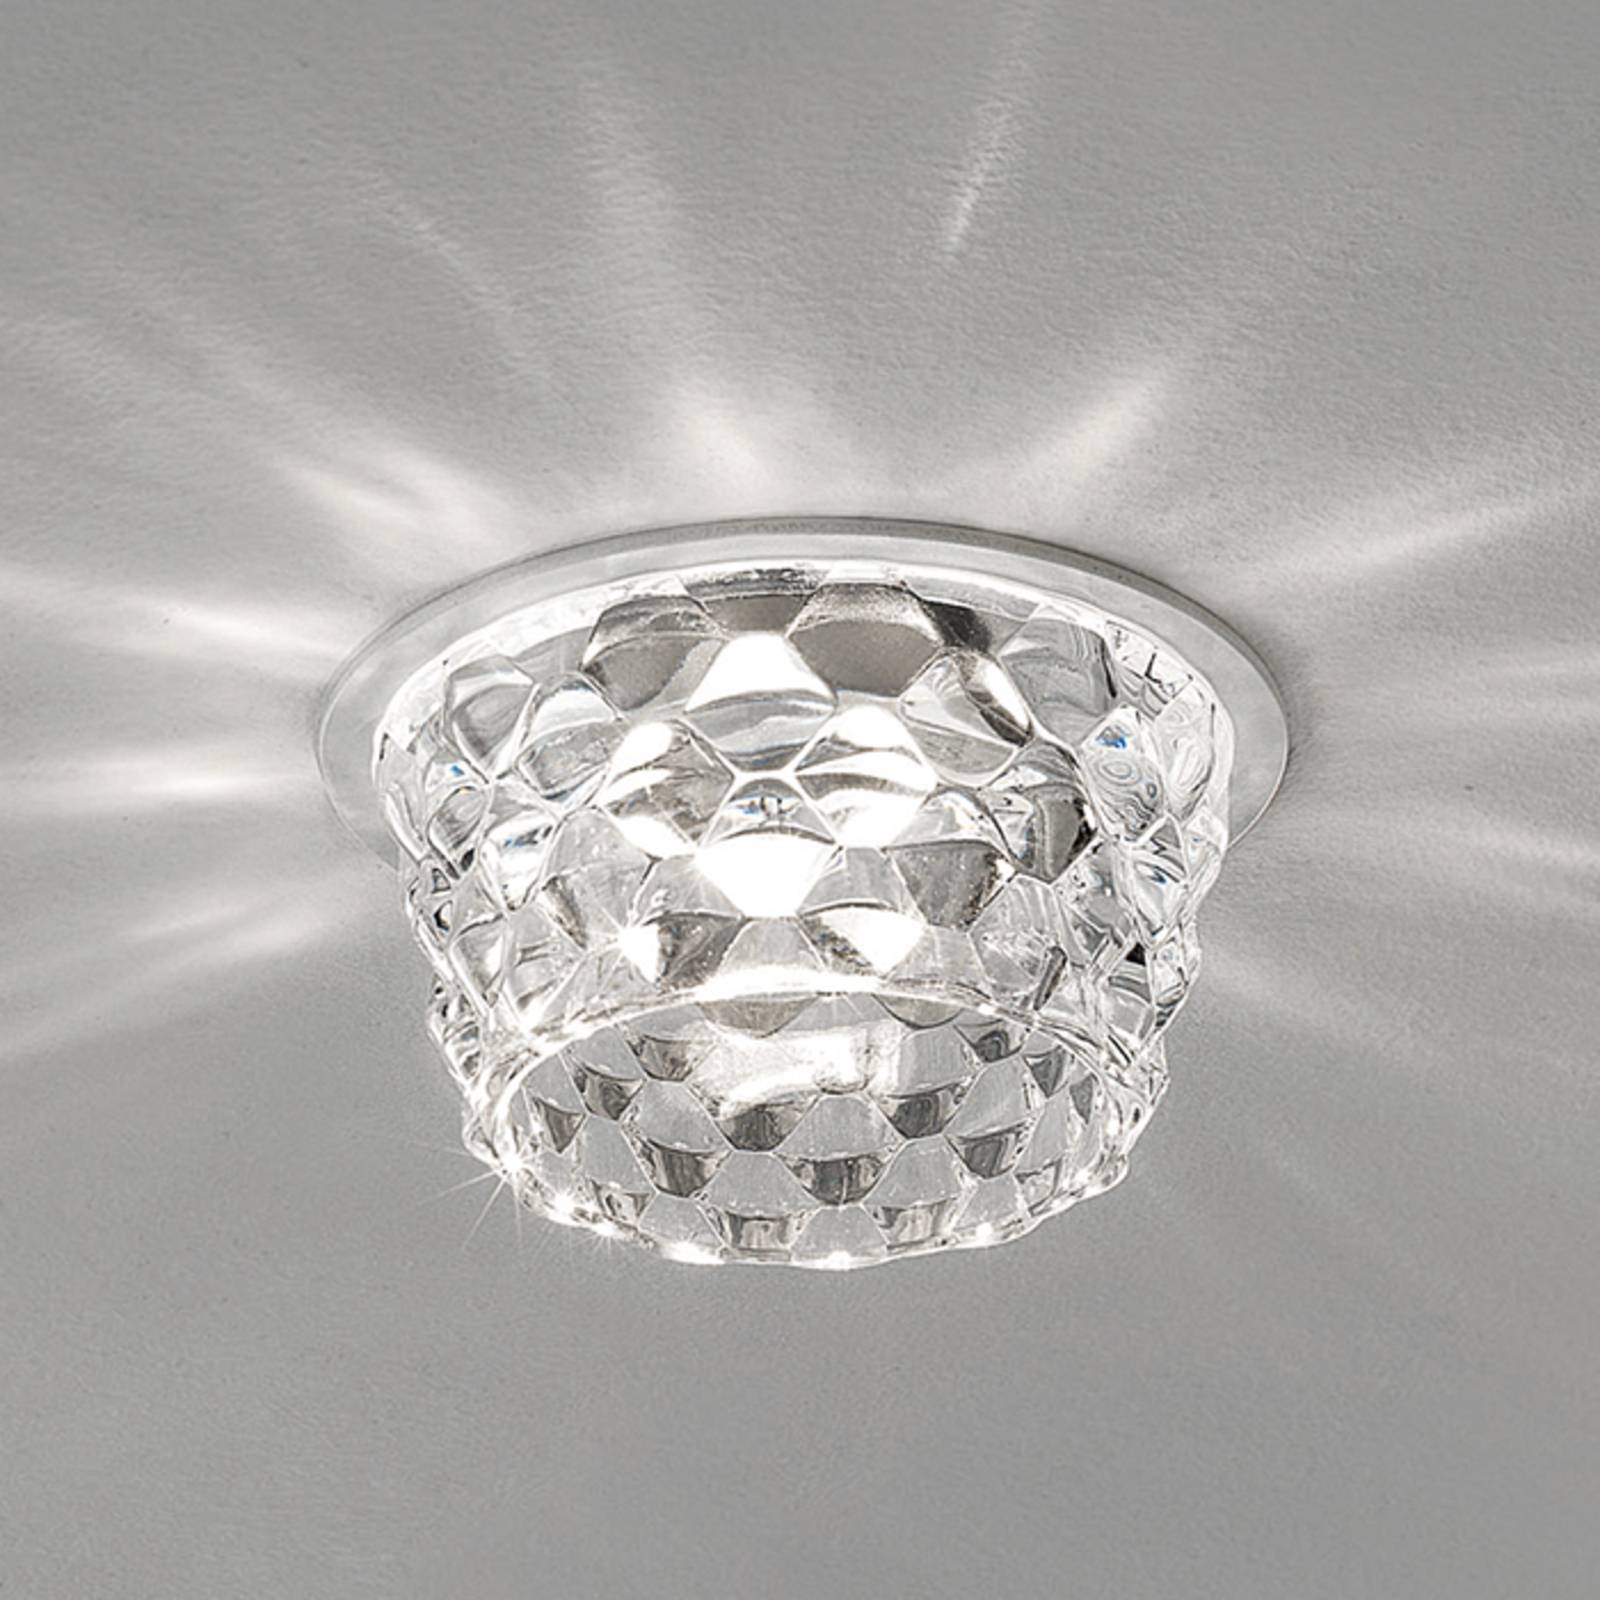 groet Dierbare Welsprekend Glazen LED plafond inbouwlamp helder | Lampen24.nl